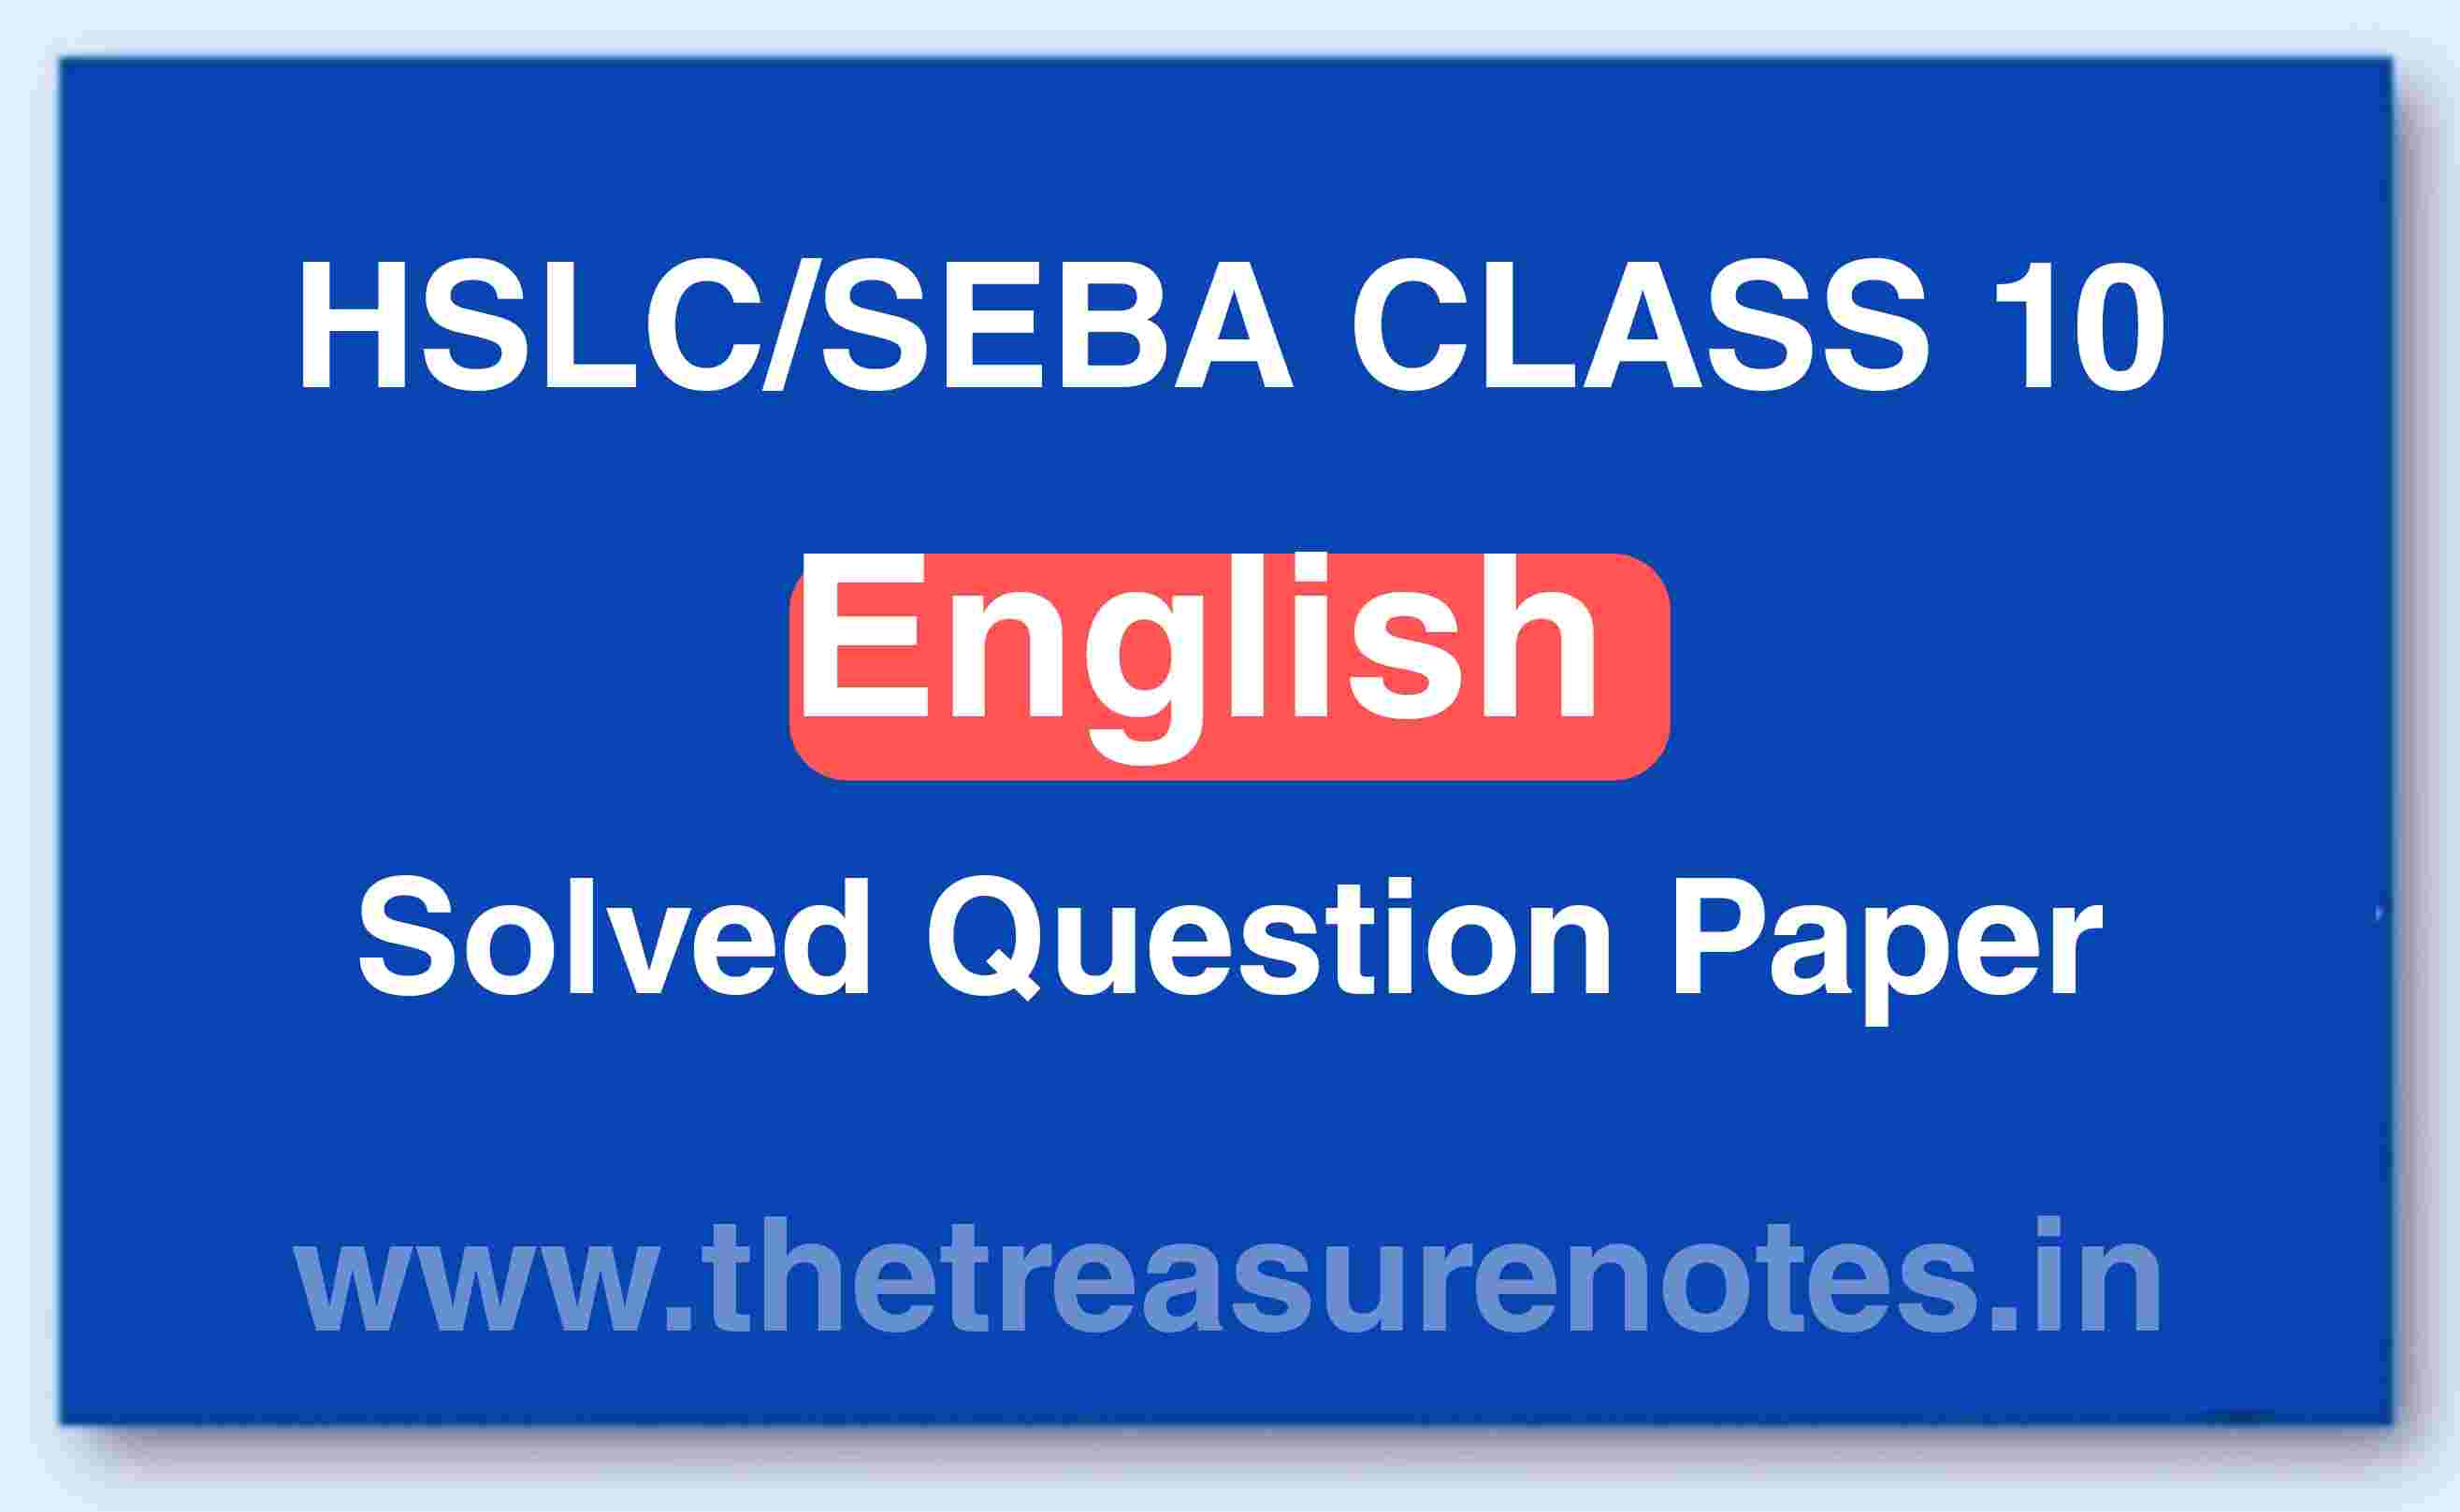 HSLC/SEBA Class 10 English Solved Question Paper 2015